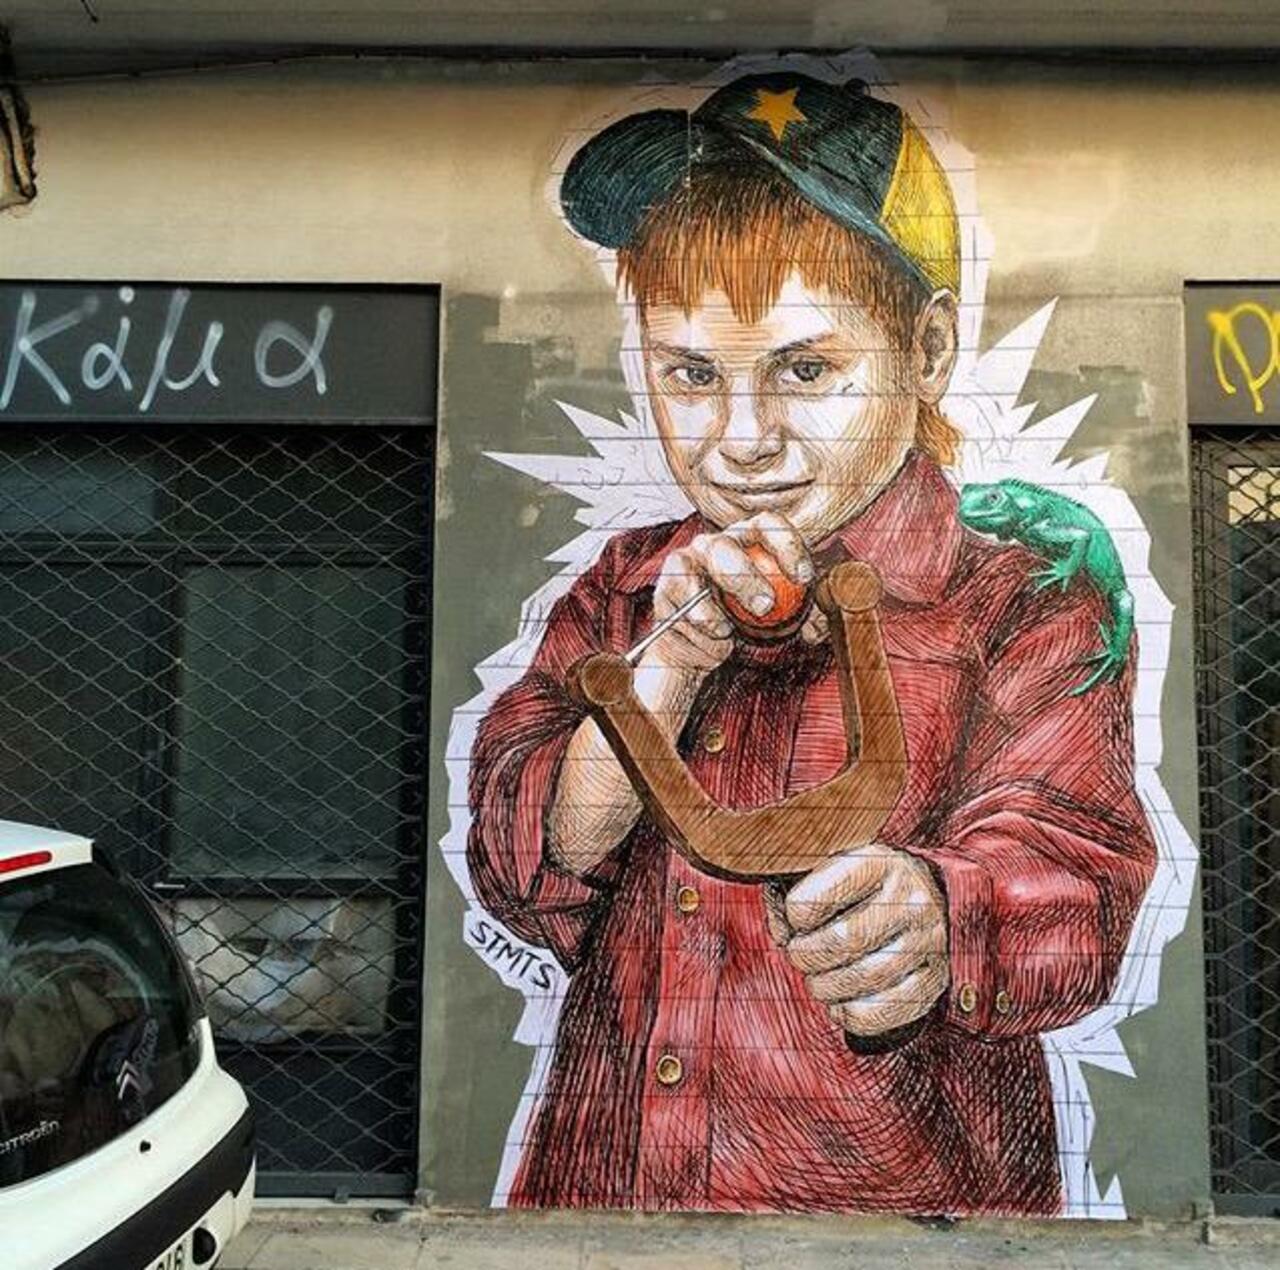 JewelNiles1: Street Art by STMTS in Athens

#art #graffiti #mural #streetart http://t.co/TGJqfBEGEM